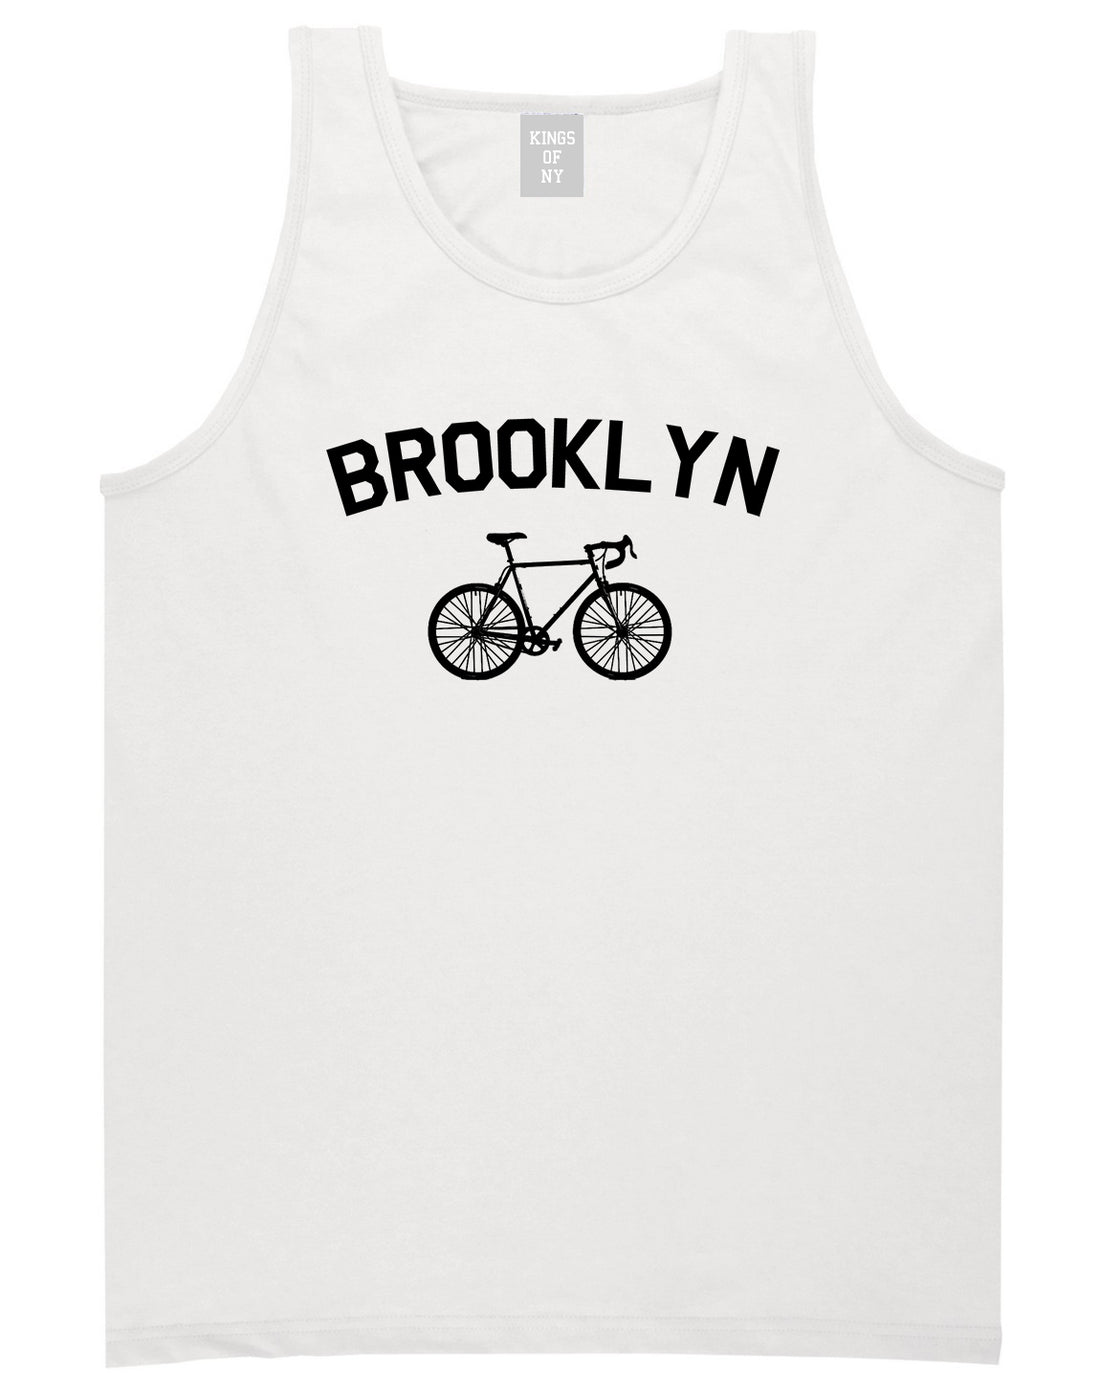 Brooklyn Vintage Bike Cycling Mens Tank Top T-Shirt White